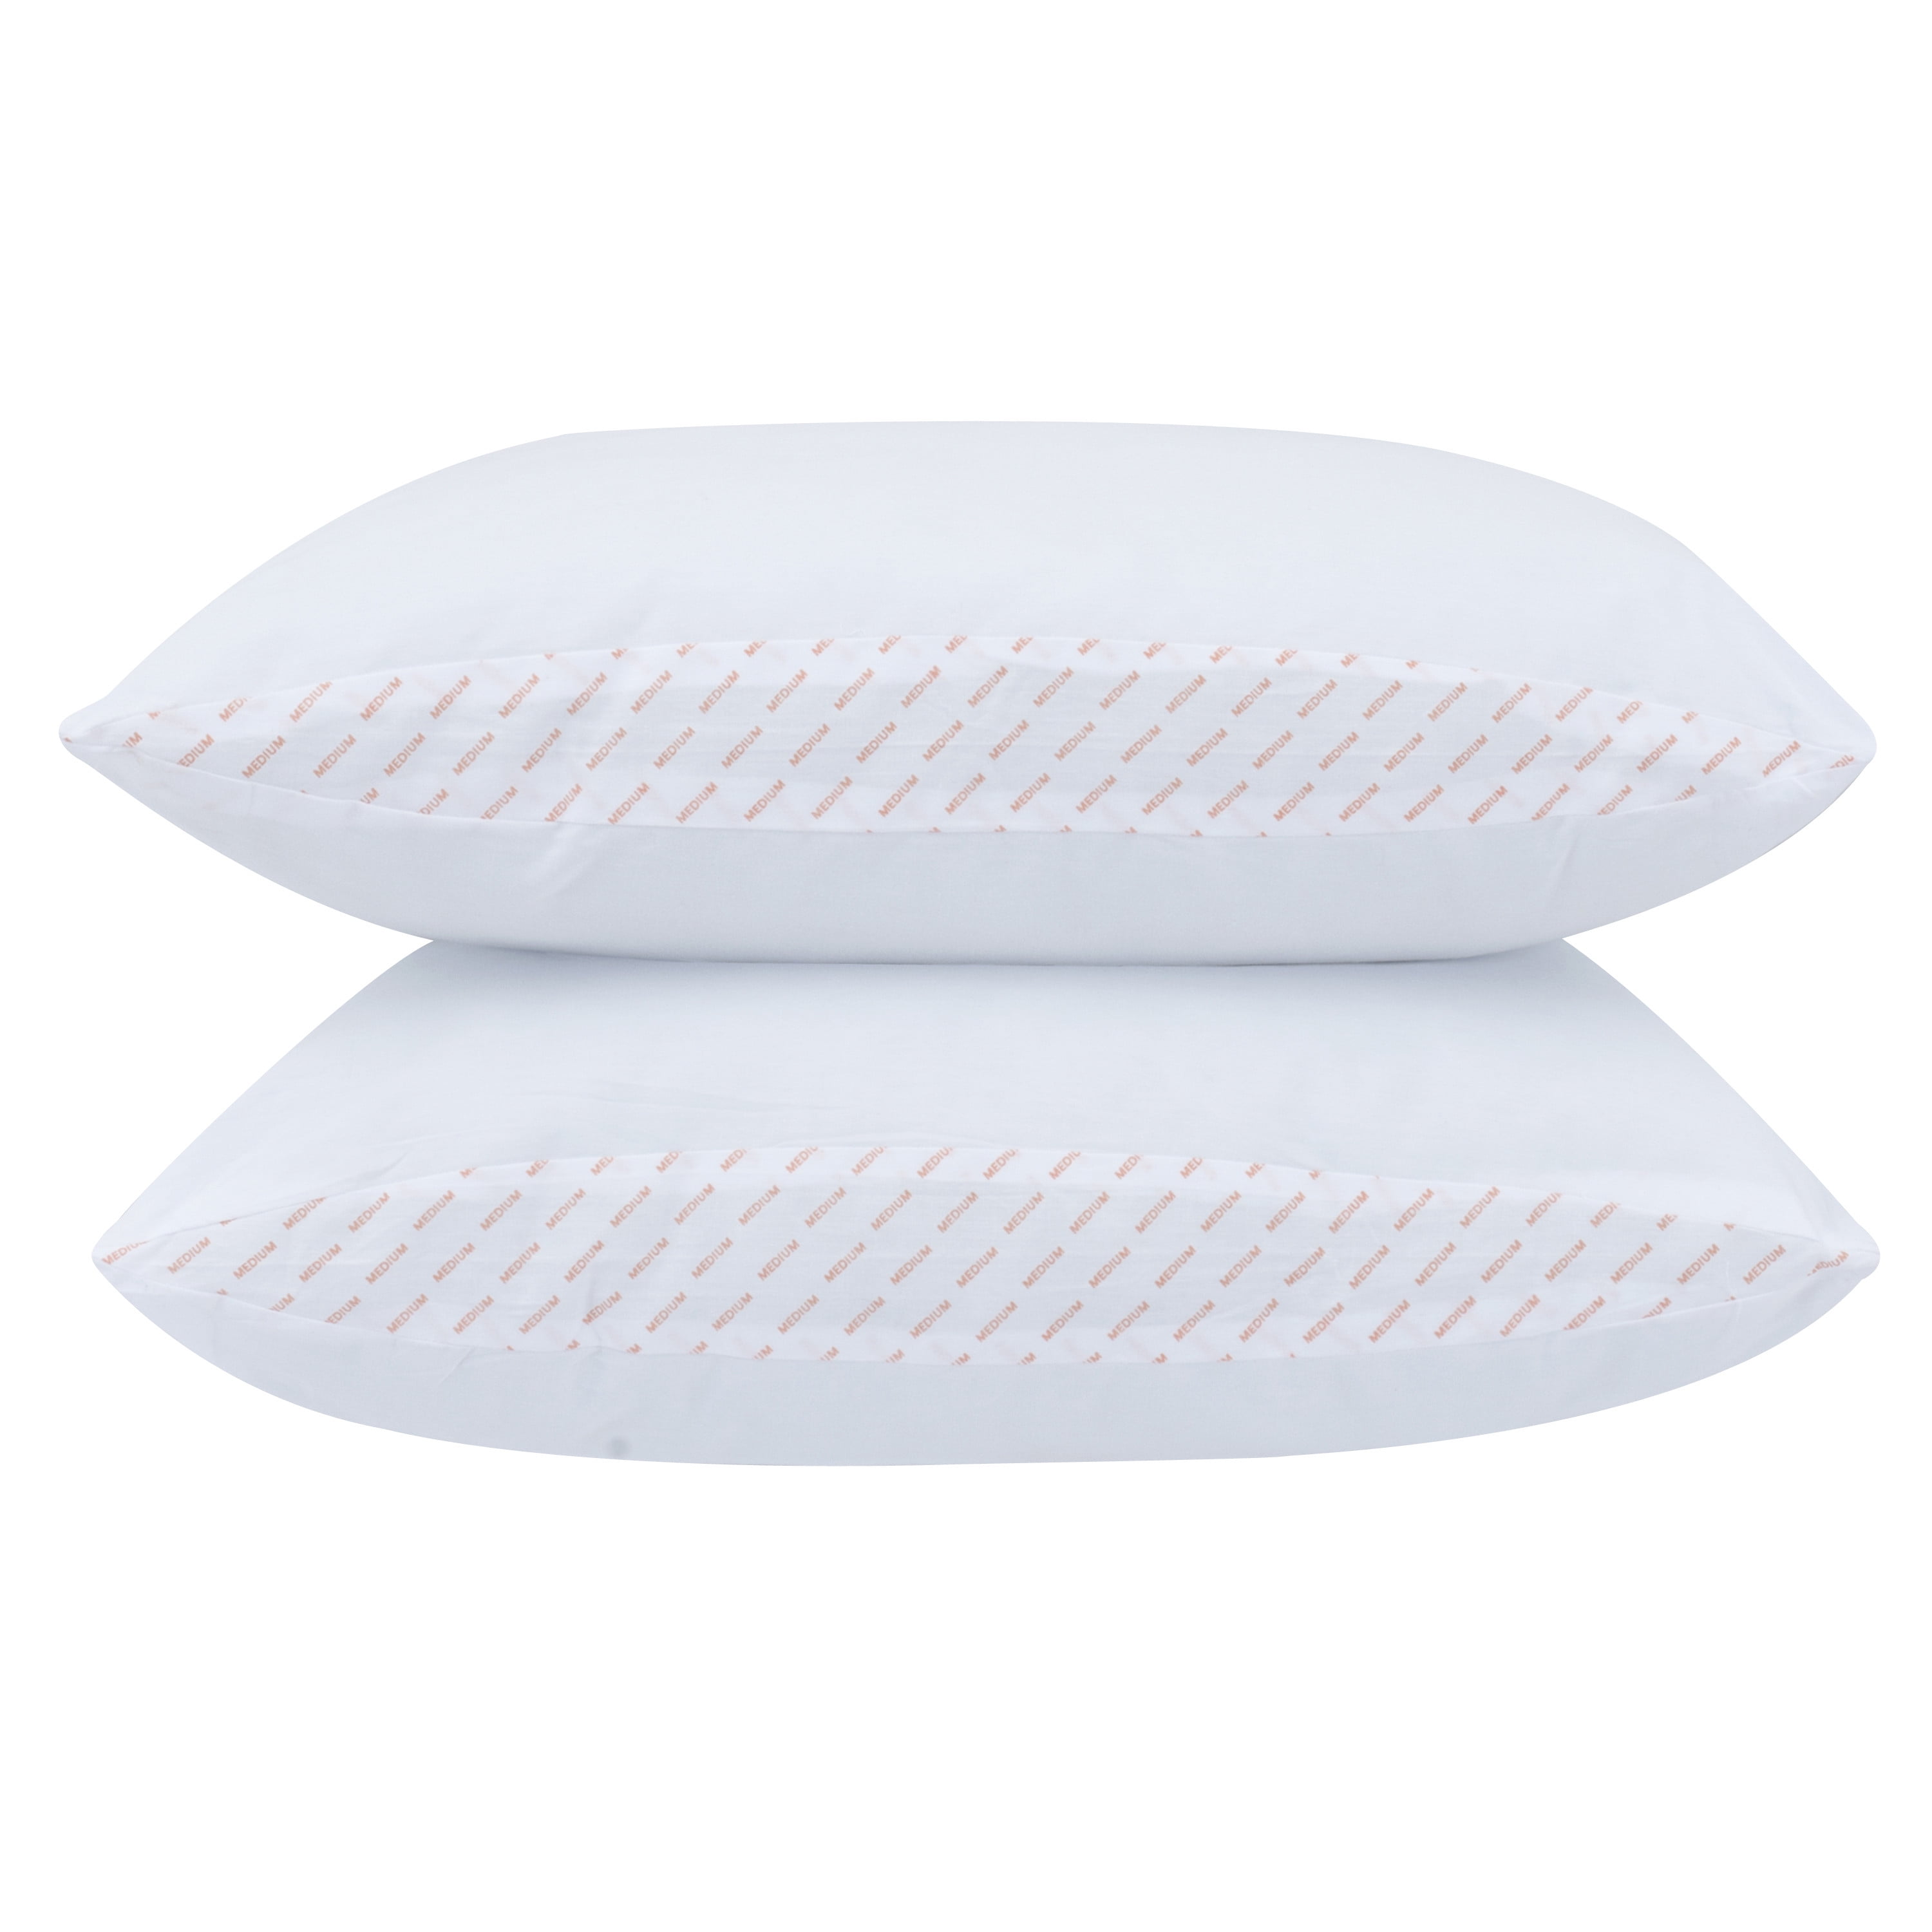 Mainstays Medium Support Pillow Set Of 2 Standard 200 Thread Count Cotton